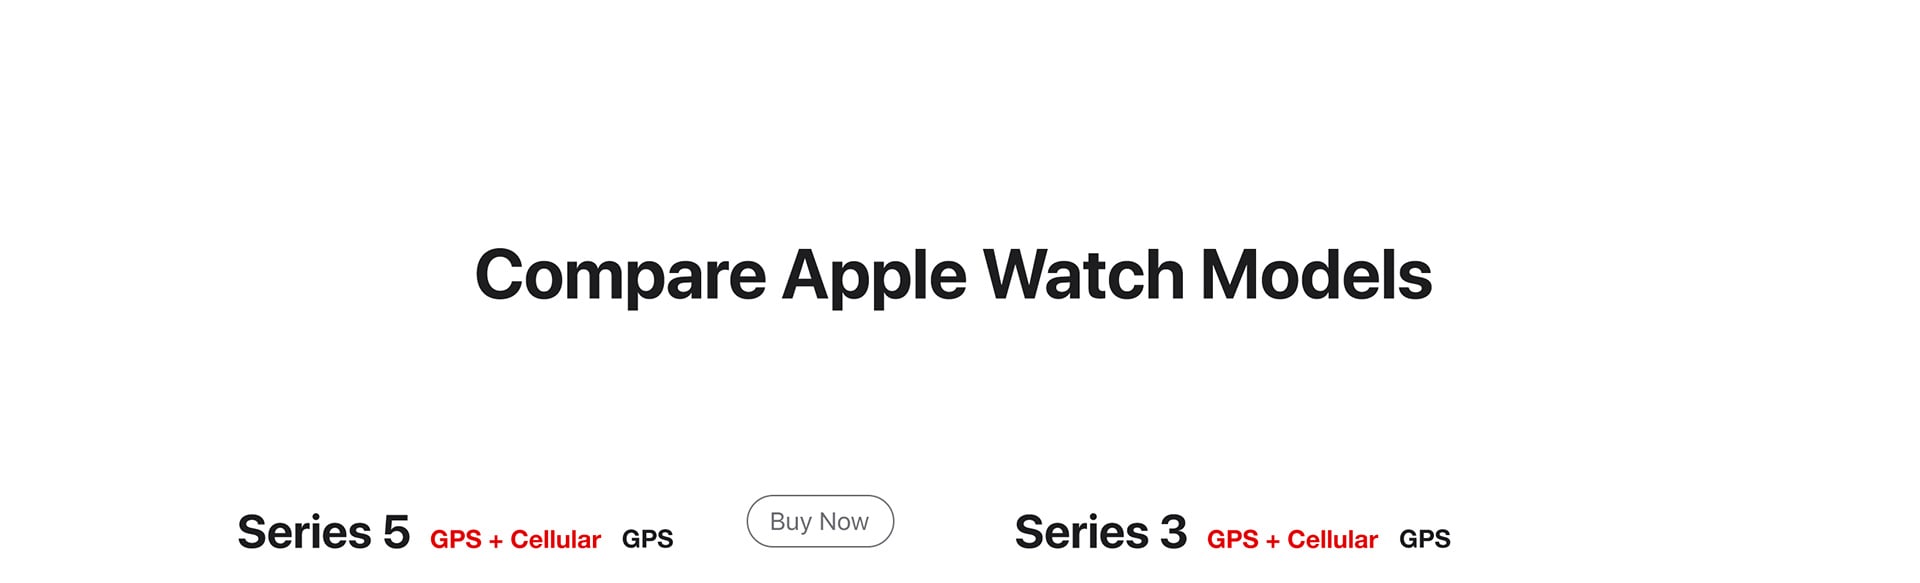 apple-watch-series5-price-etisalat-uae-comparison-1